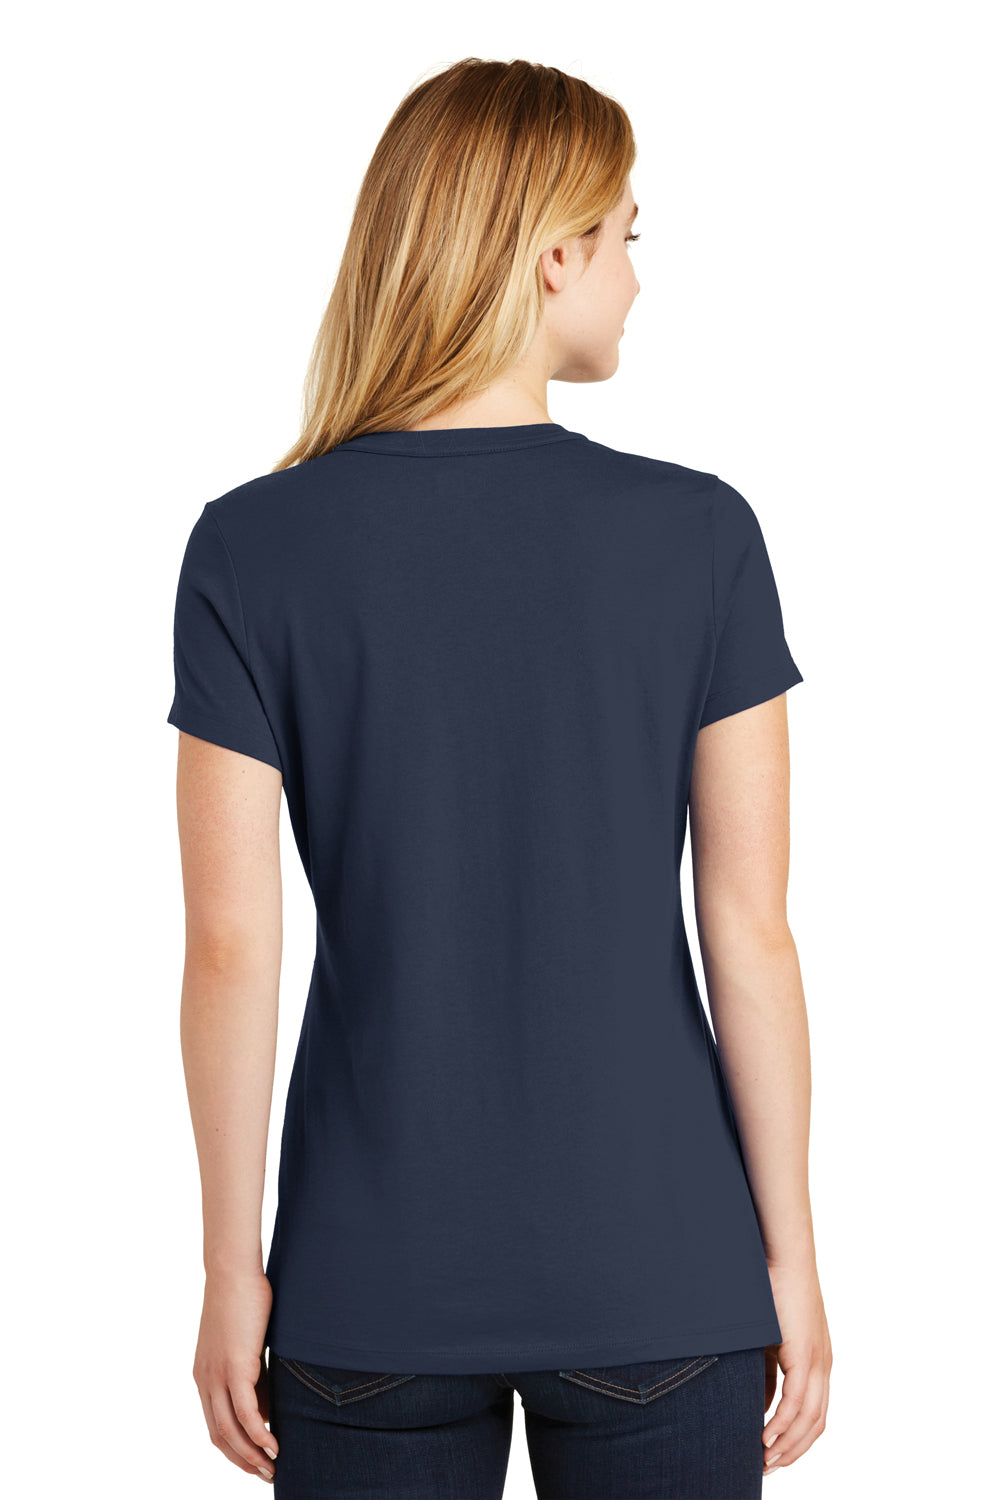 New Era LNEA100 Womens Heritage Short Sleeve Crewneck T-Shirt Navy Blue Back